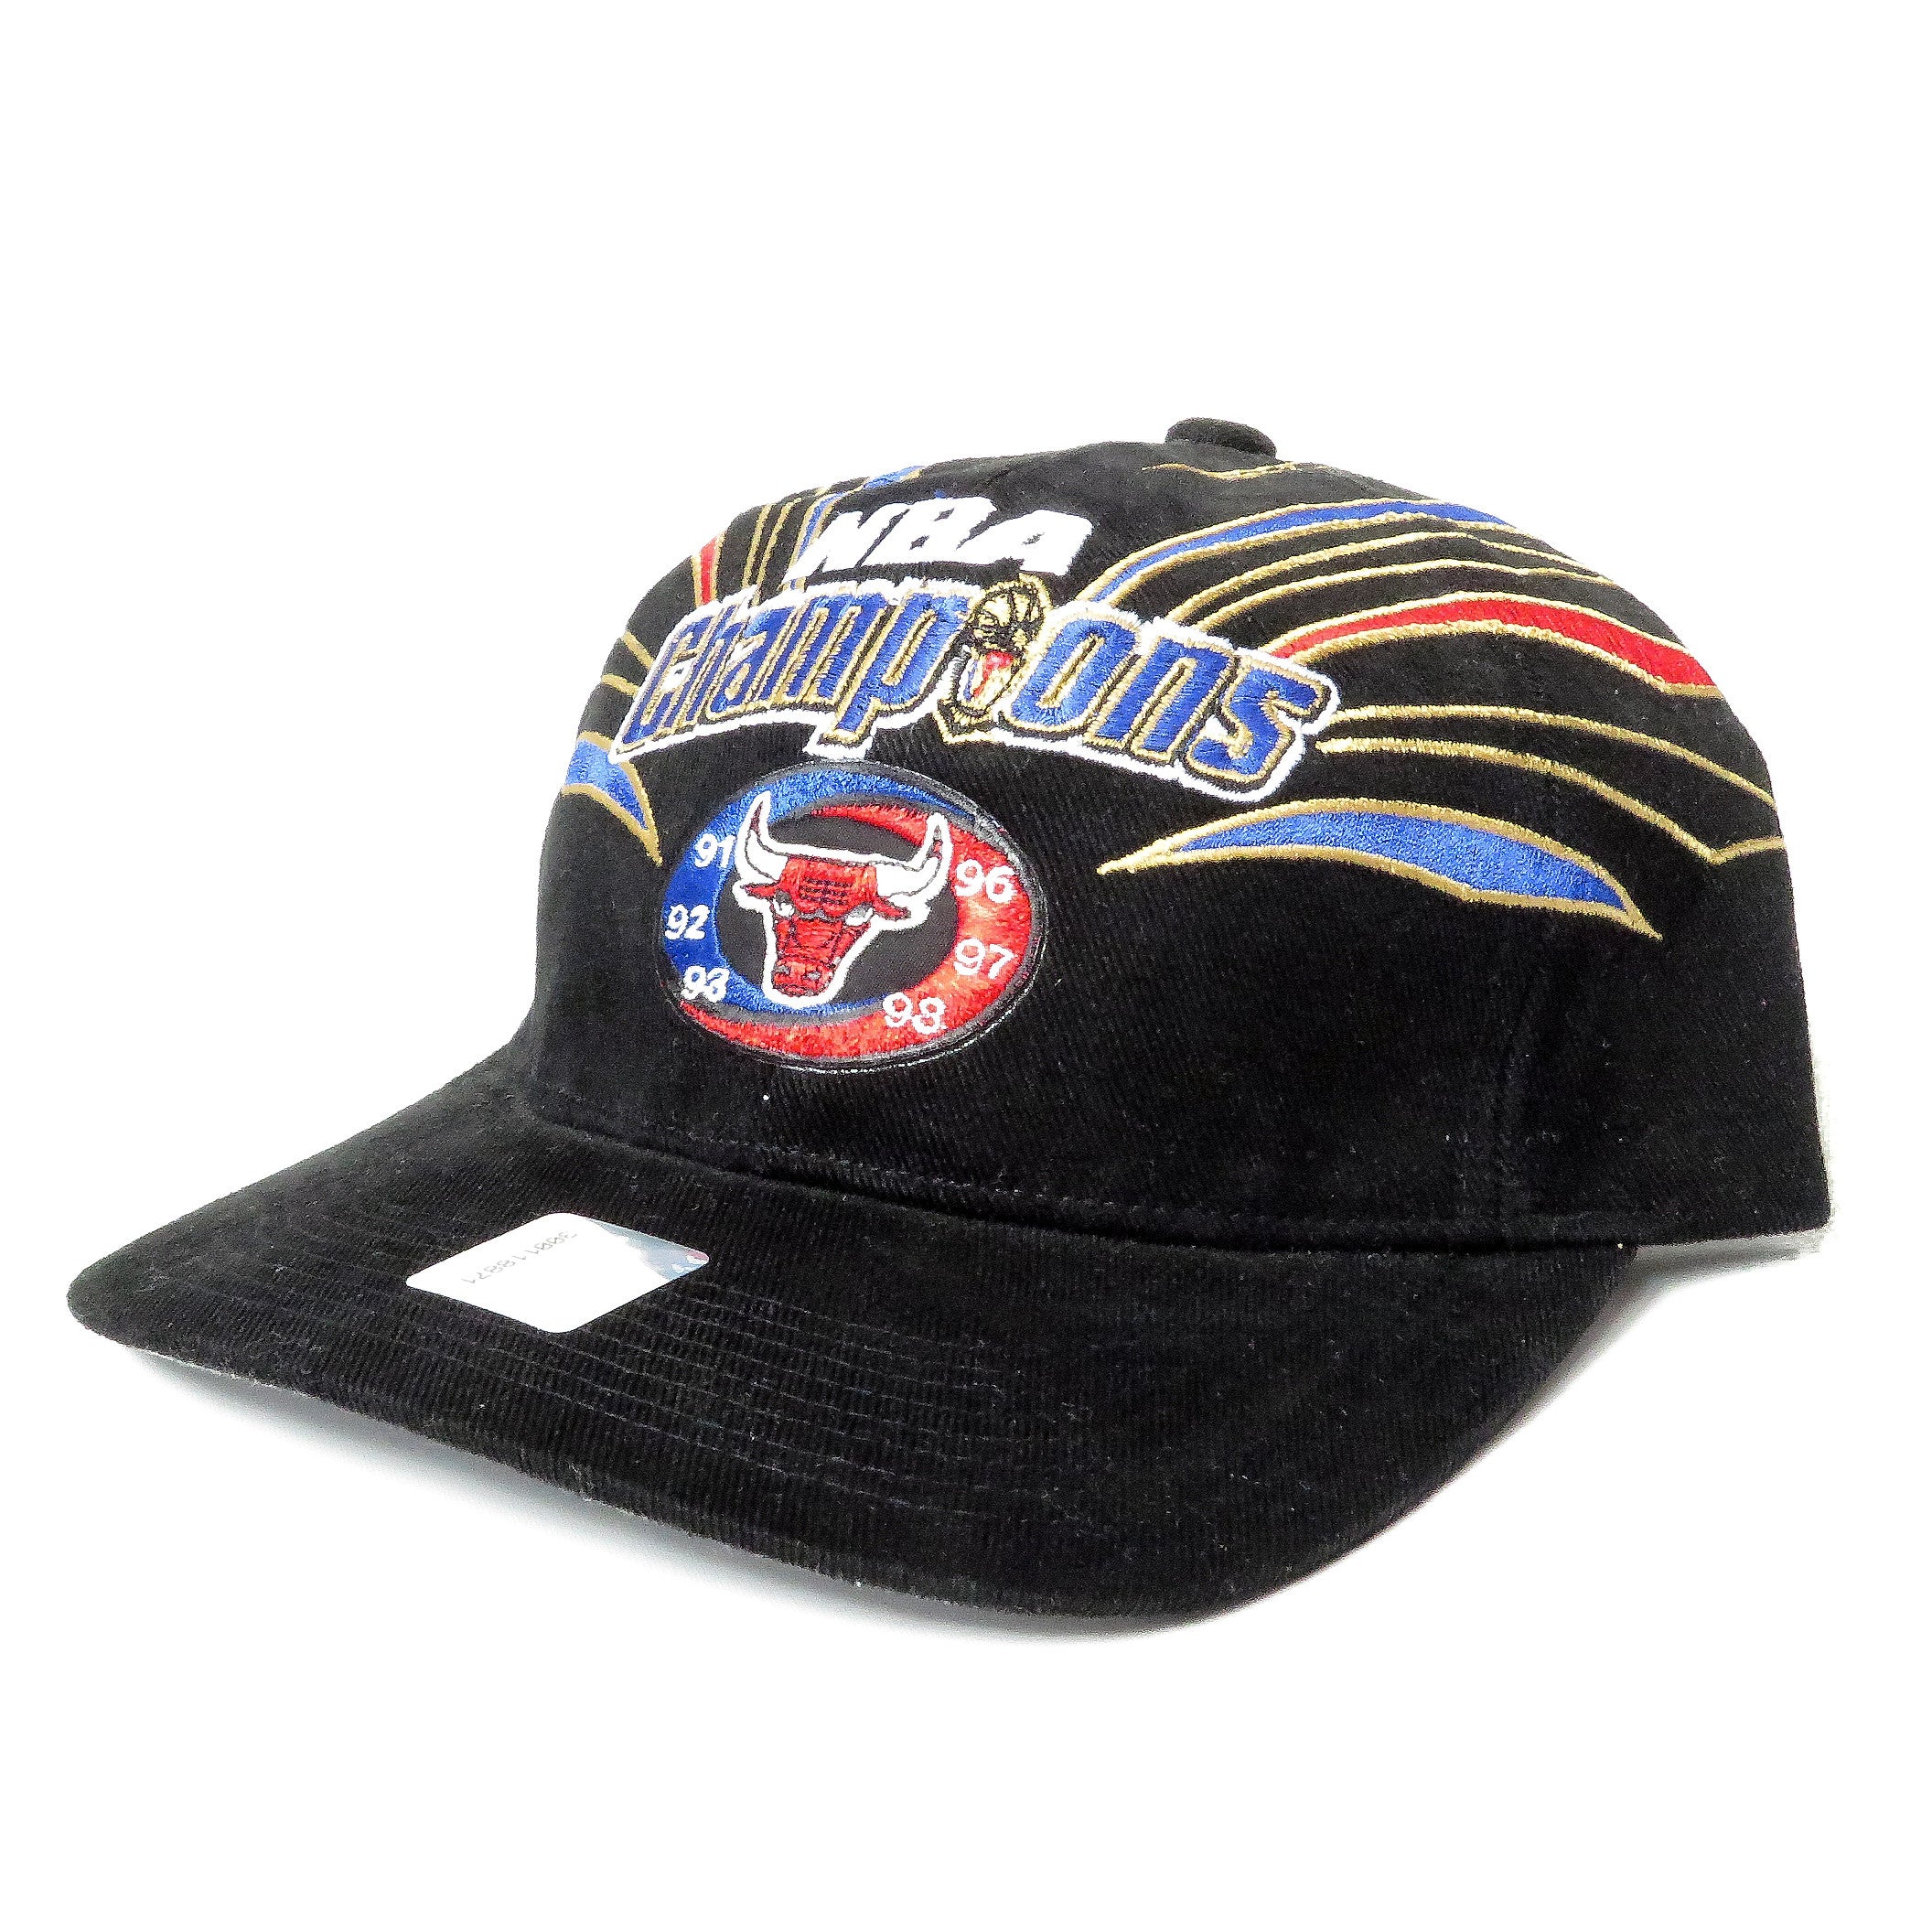 Vintage STARTER Chicago Bulls NBA CHAMPIONS 91 92 93 96 97 98 Strapback Hat  Cap